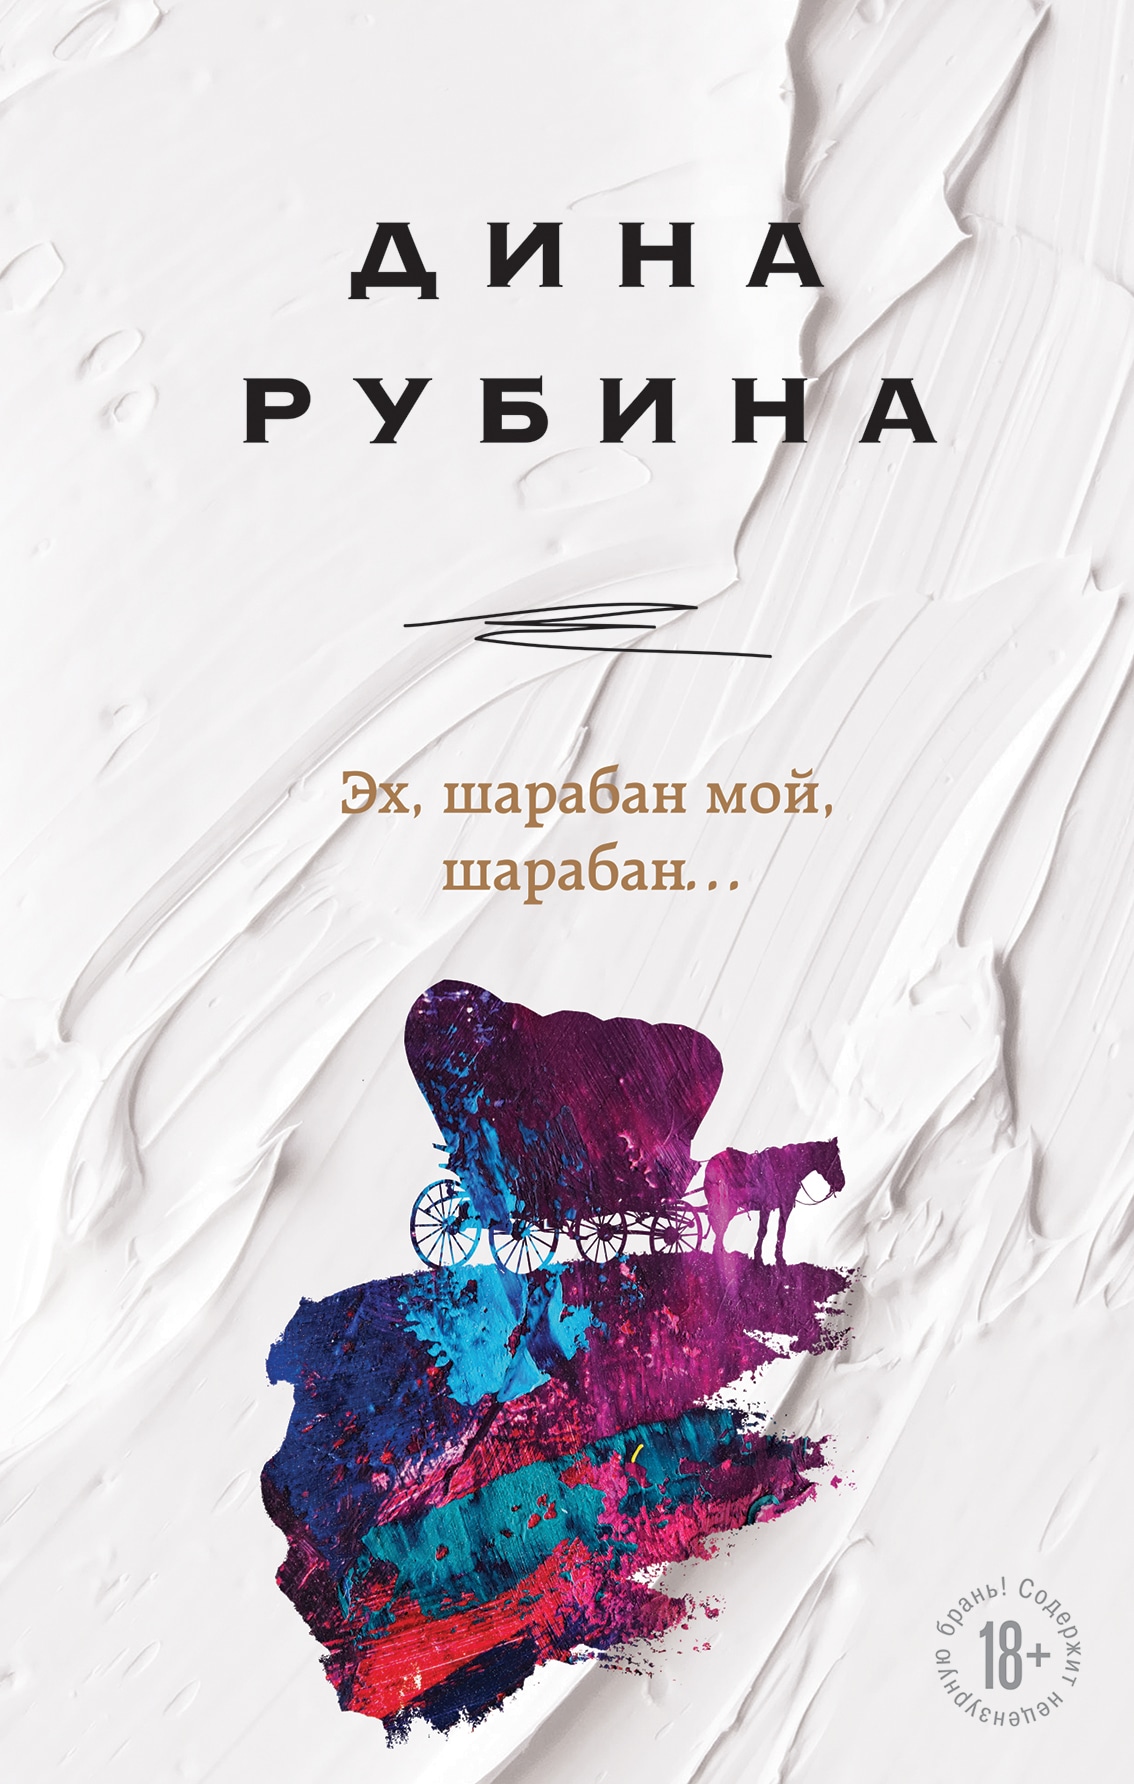 Book “Эх, шарабан мой, шарабан…” by Дина Рубина — 2022